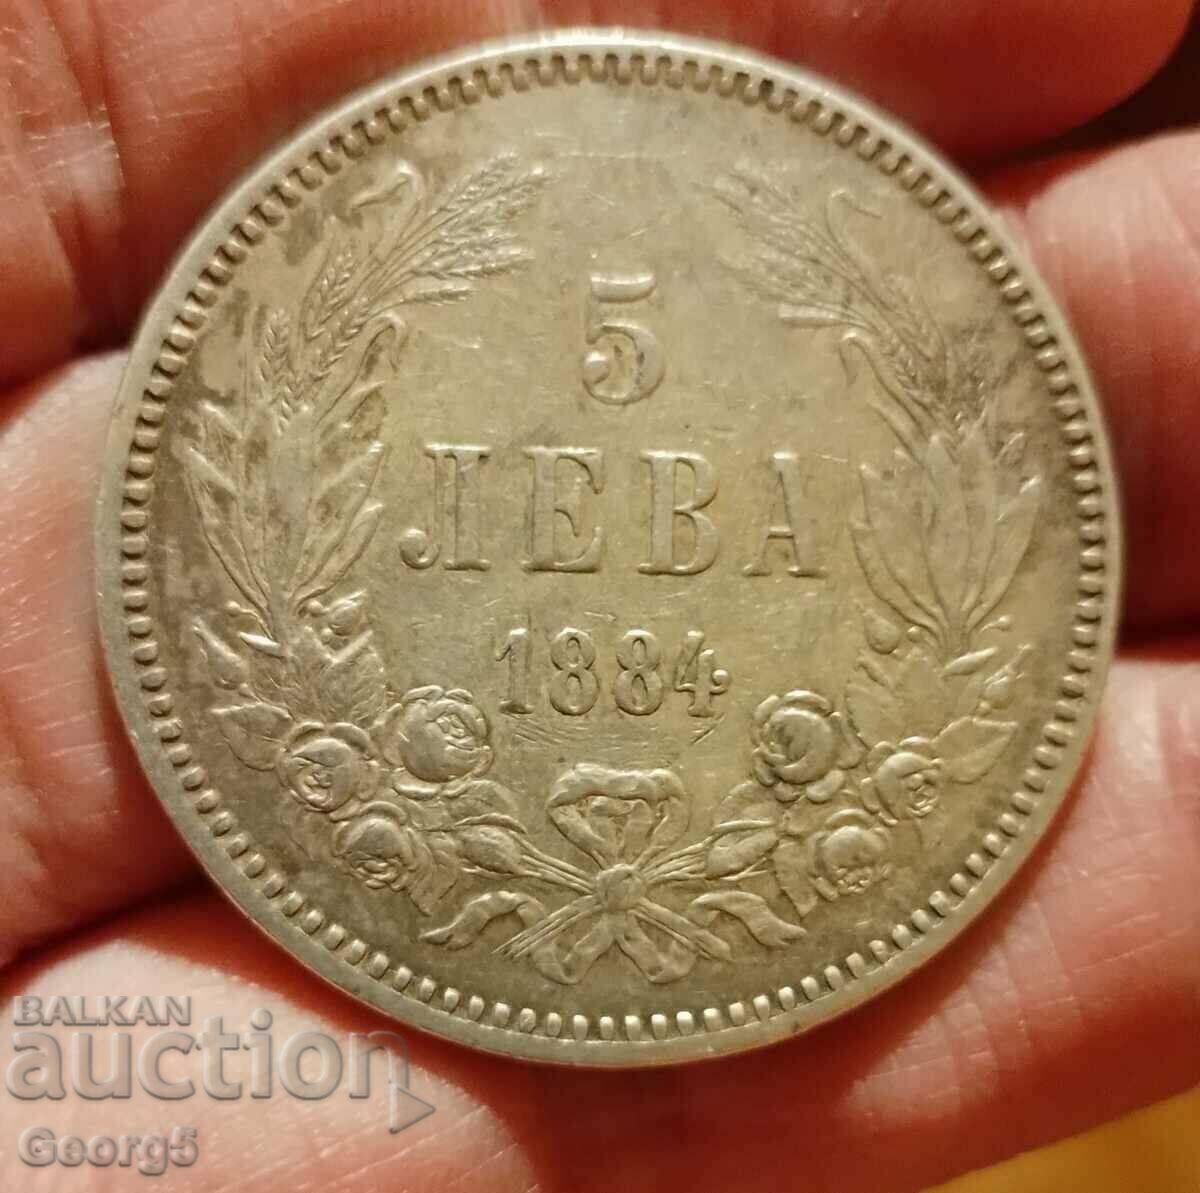 5 leva 1884 year